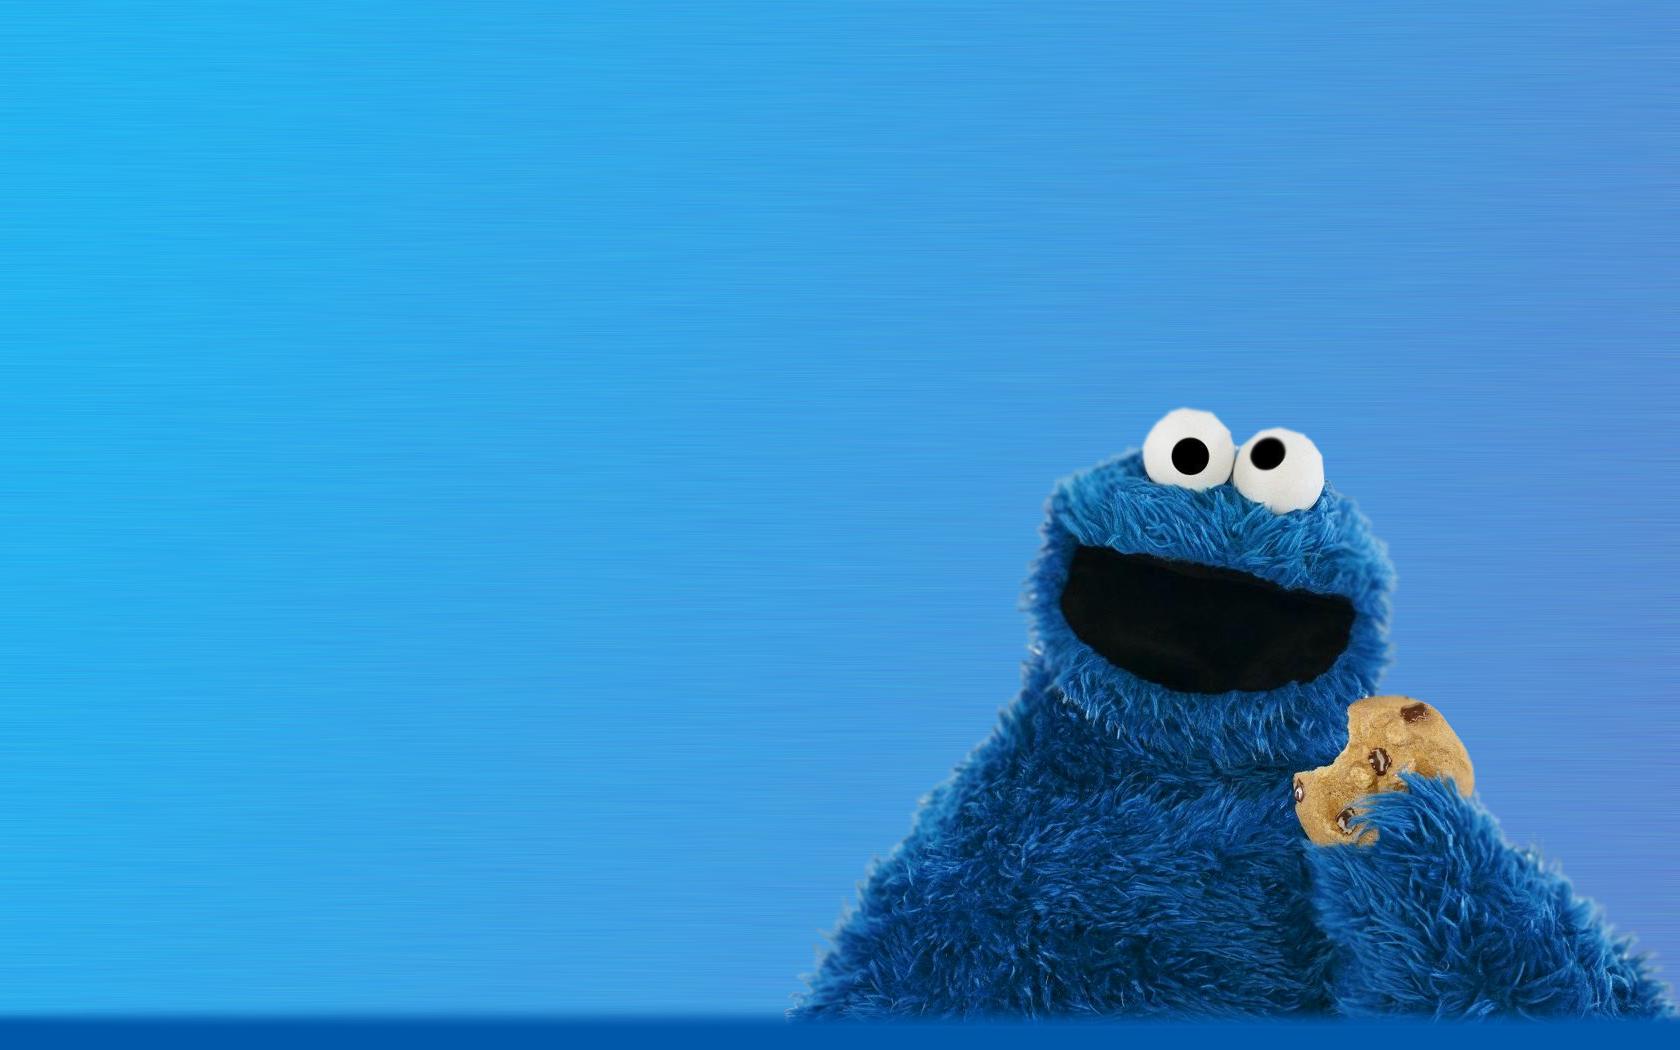 Cookie Monster wallpaper HD free download Download Wallpaper. HD